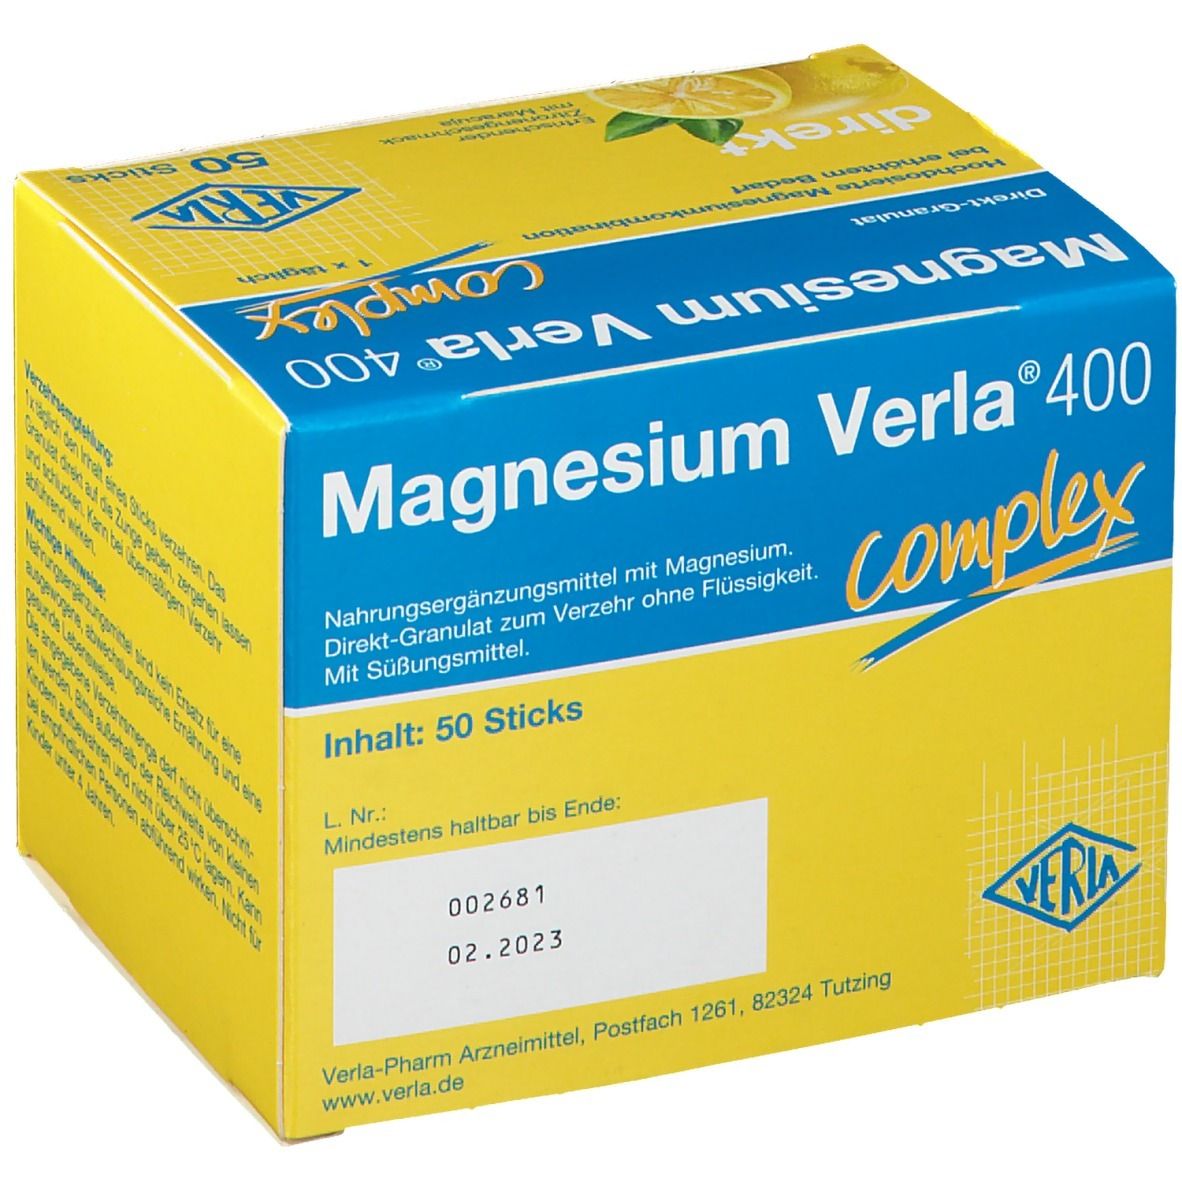 Magnesium Verla® 400 Direkt Granulat